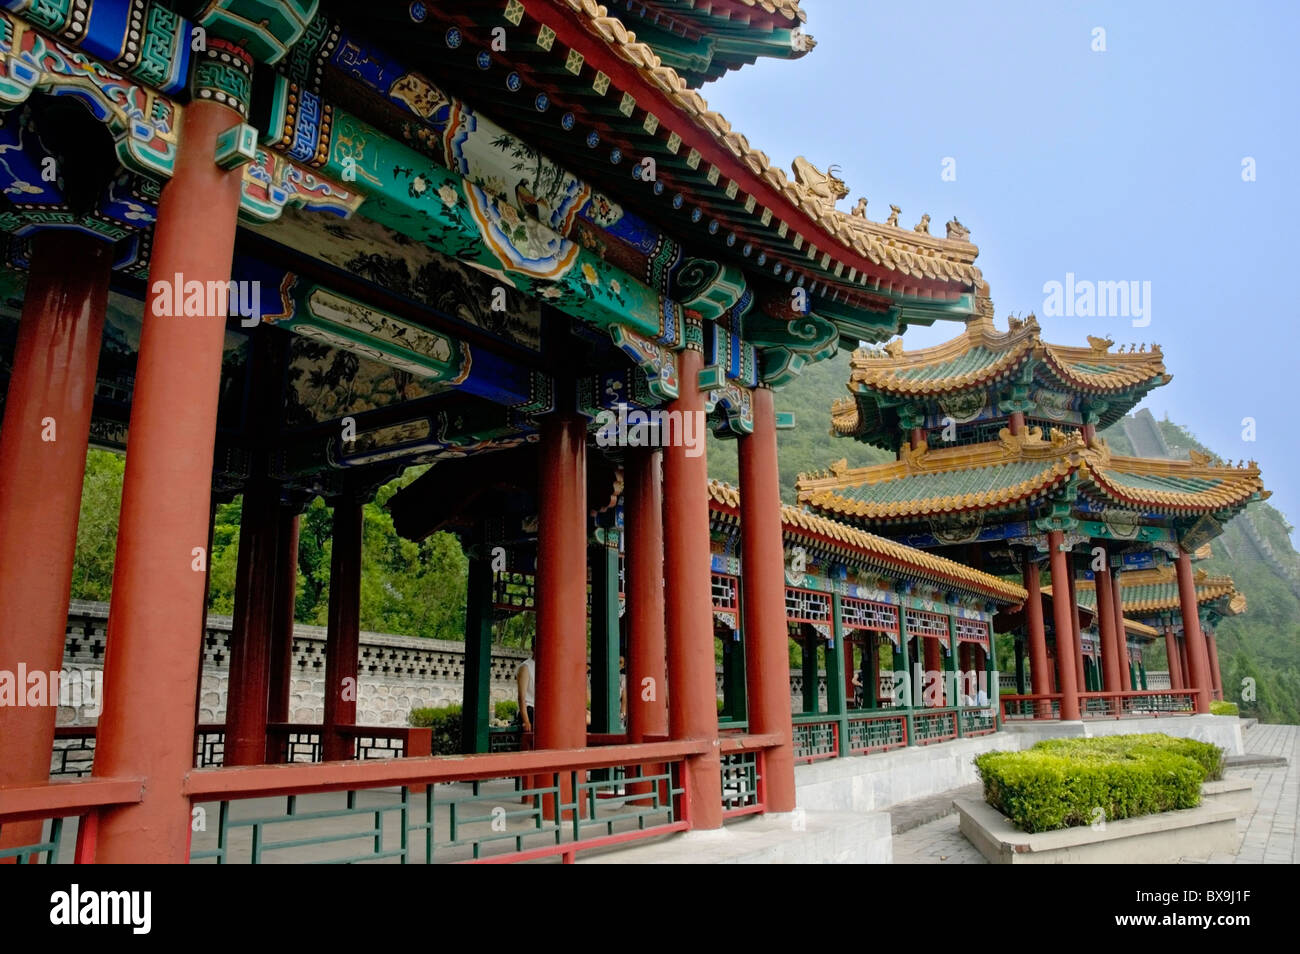 Decorative columns and pavilions on the Great Wall of China, Juyongguan Gate near Badaling, China Stock Photo